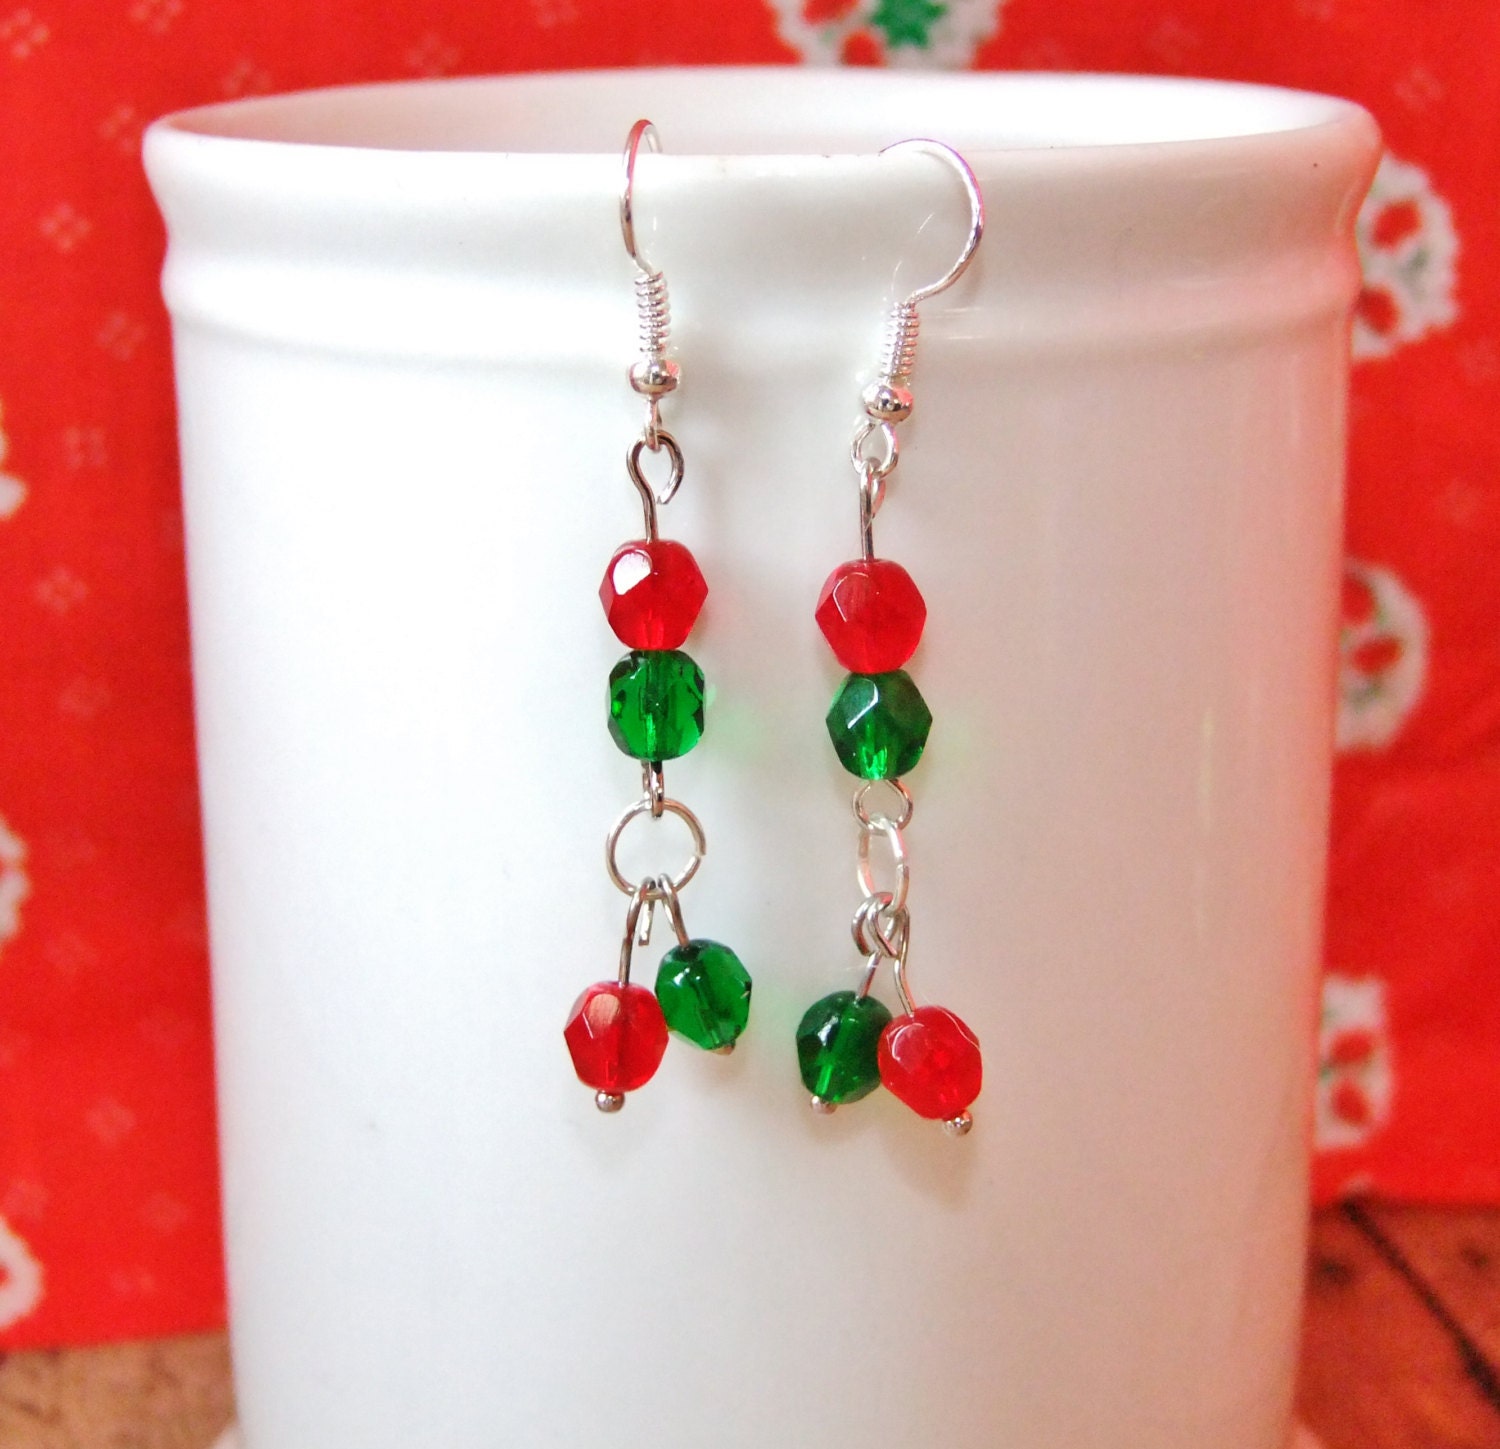 Handmade Christmas earrings red green earrings by SewLovelyCupcake